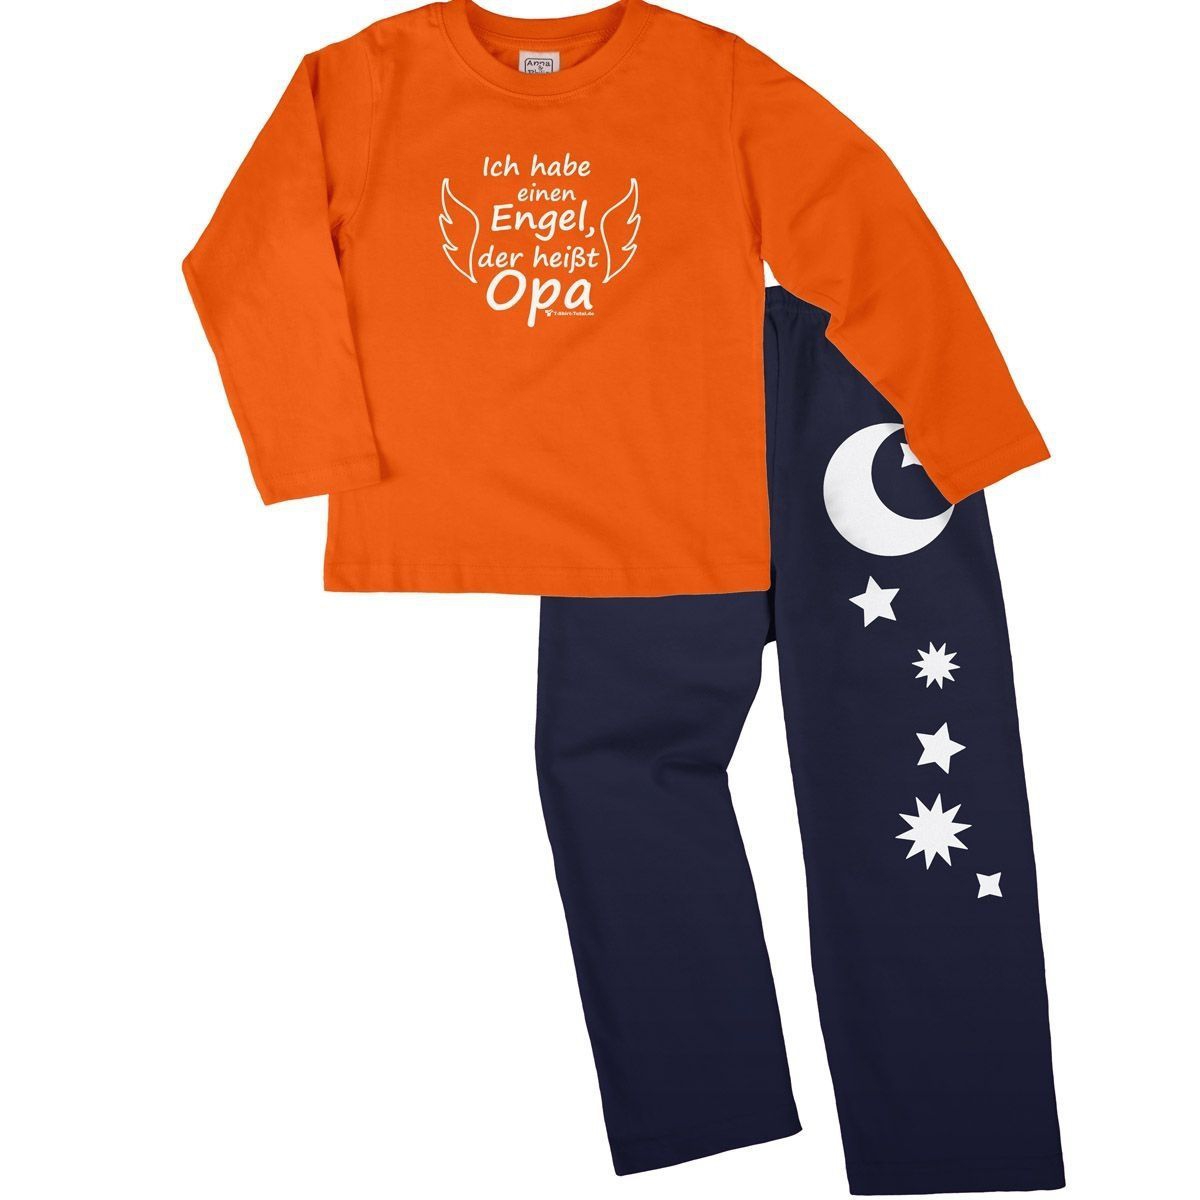 Engel Opa Pyjama Set orange / navy 110 / 116